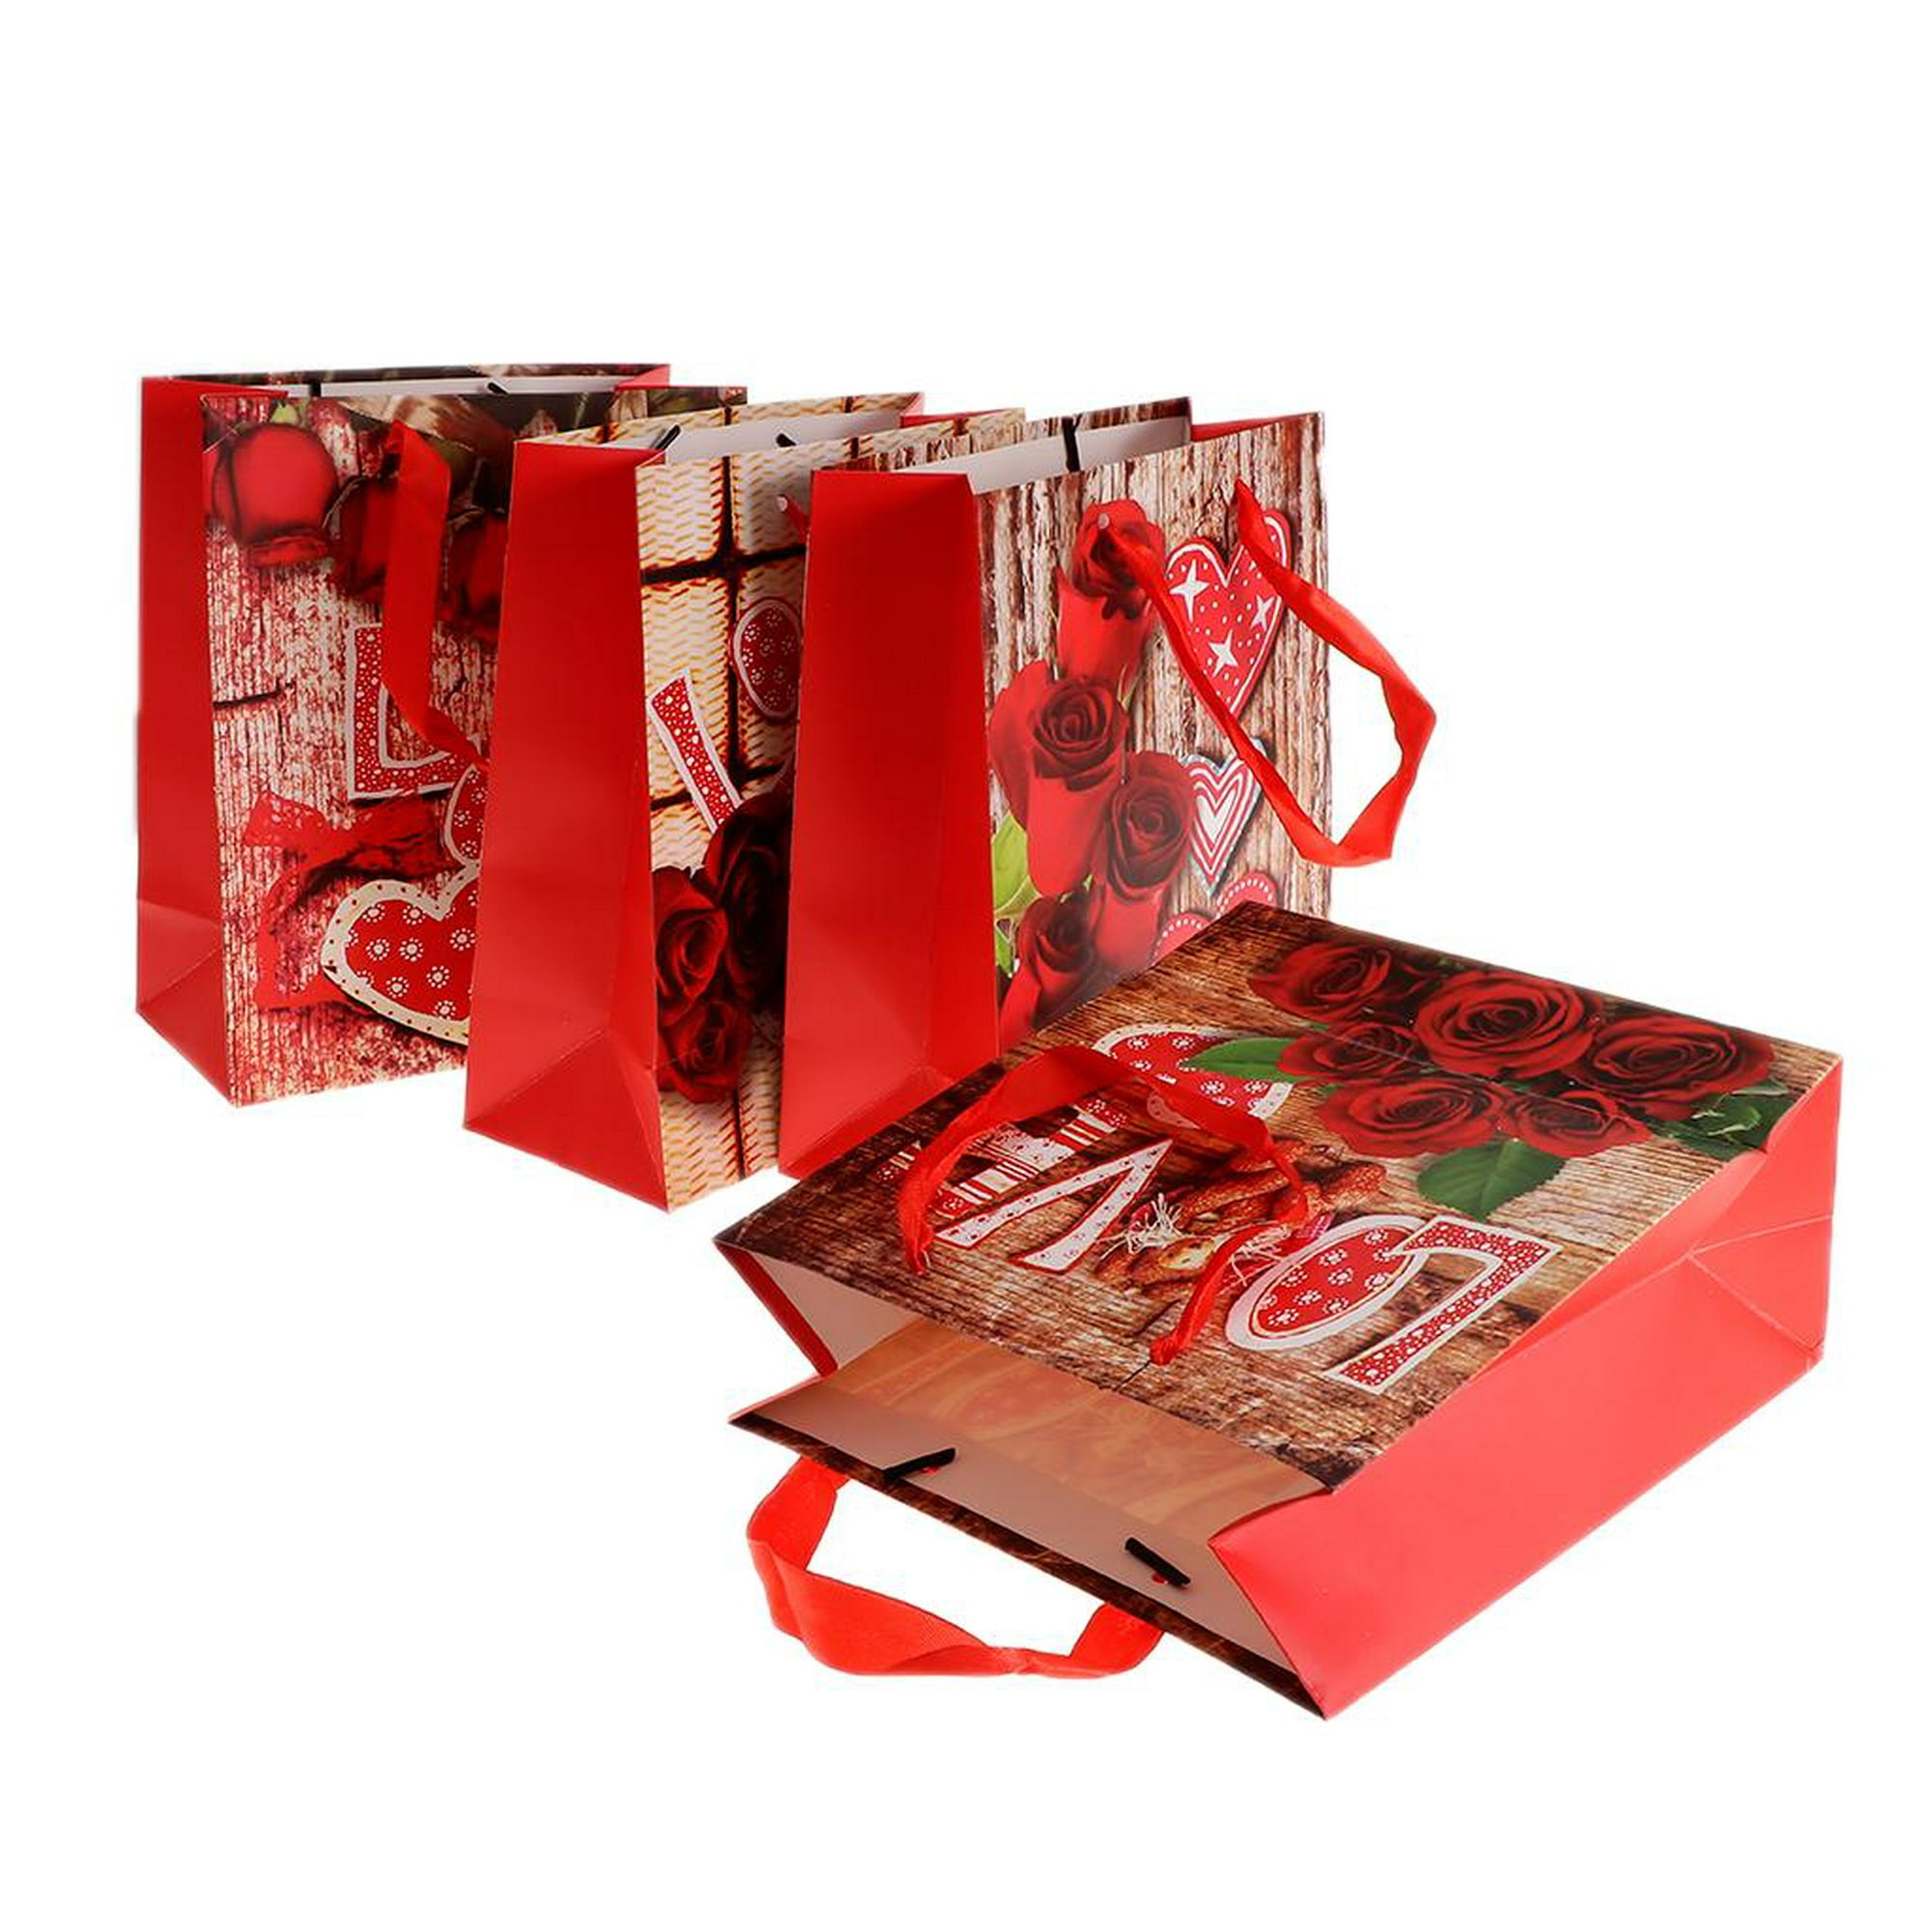 Caja de recuerdo transparente con asa - Diseño de bolso de 4 x 3 x 3  pulgadas - Juego de 12 cajas de regalo